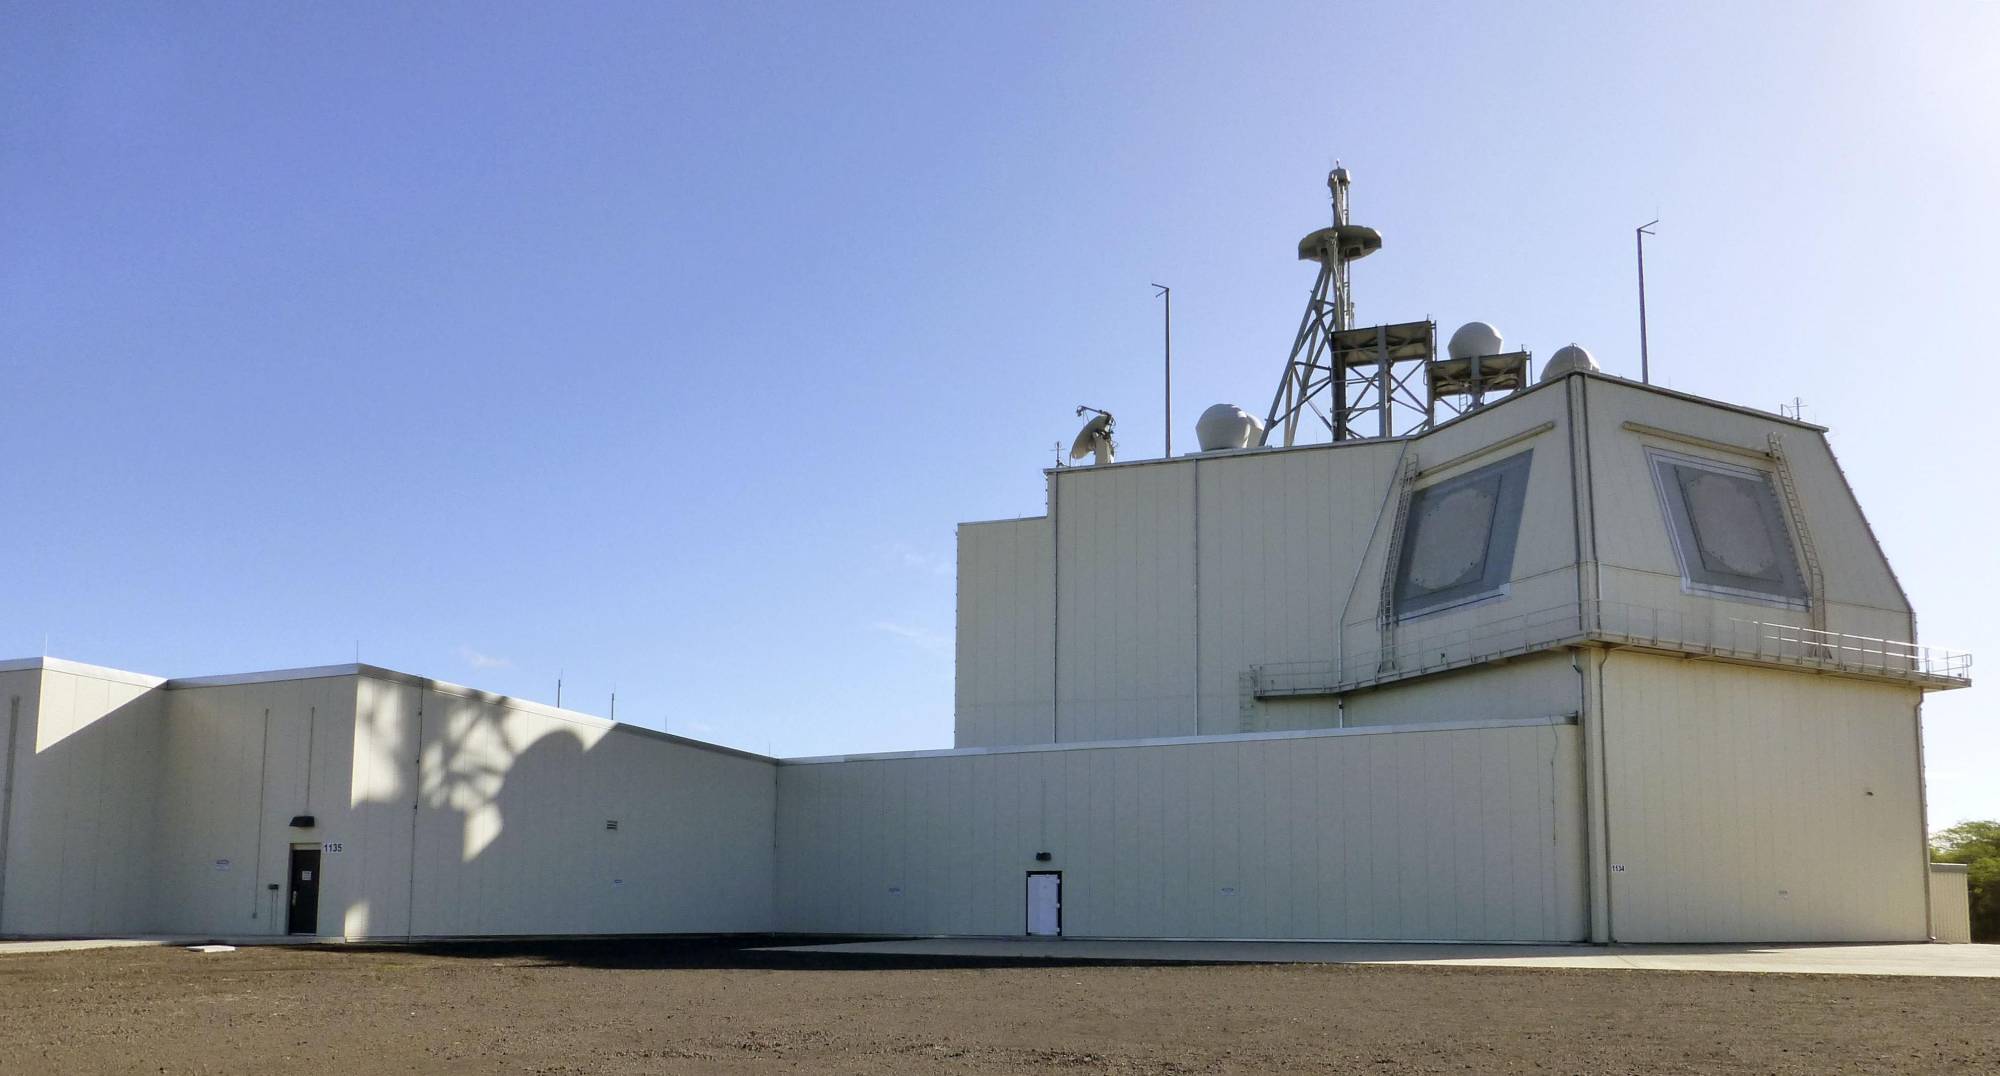 The Aegis Ashore land-based missile defense test complex on the Hawaiian island of Kauai is seen in January last year. | KYODO